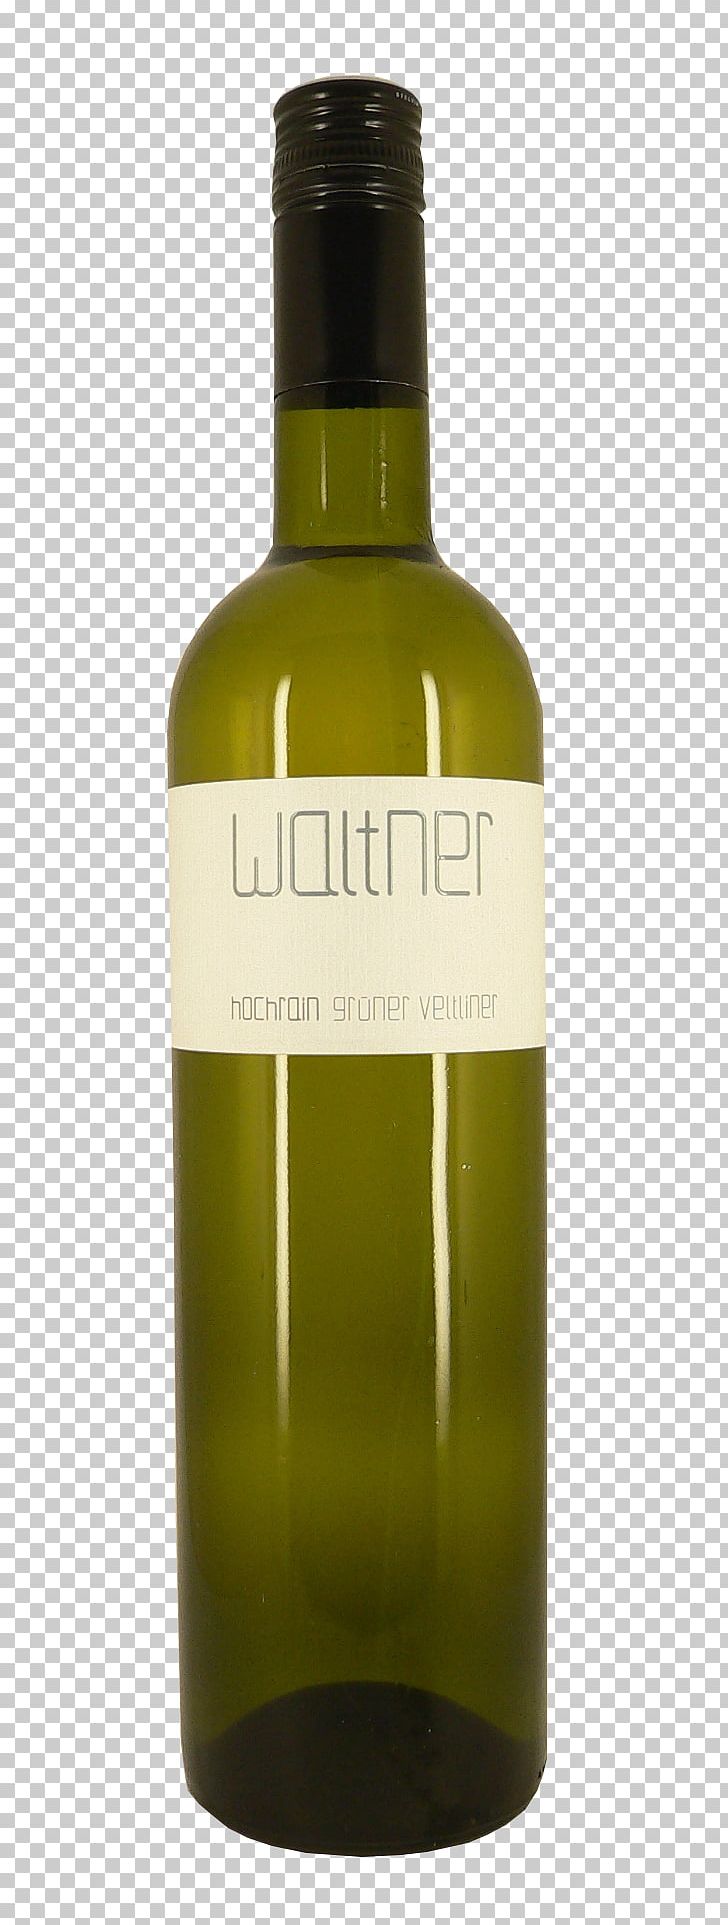 White Wine Glass Bottle Liqueur PNG, Clipart, Bottle, Drink, Food Drinks, Glass, Glass Bottle Free PNG Download